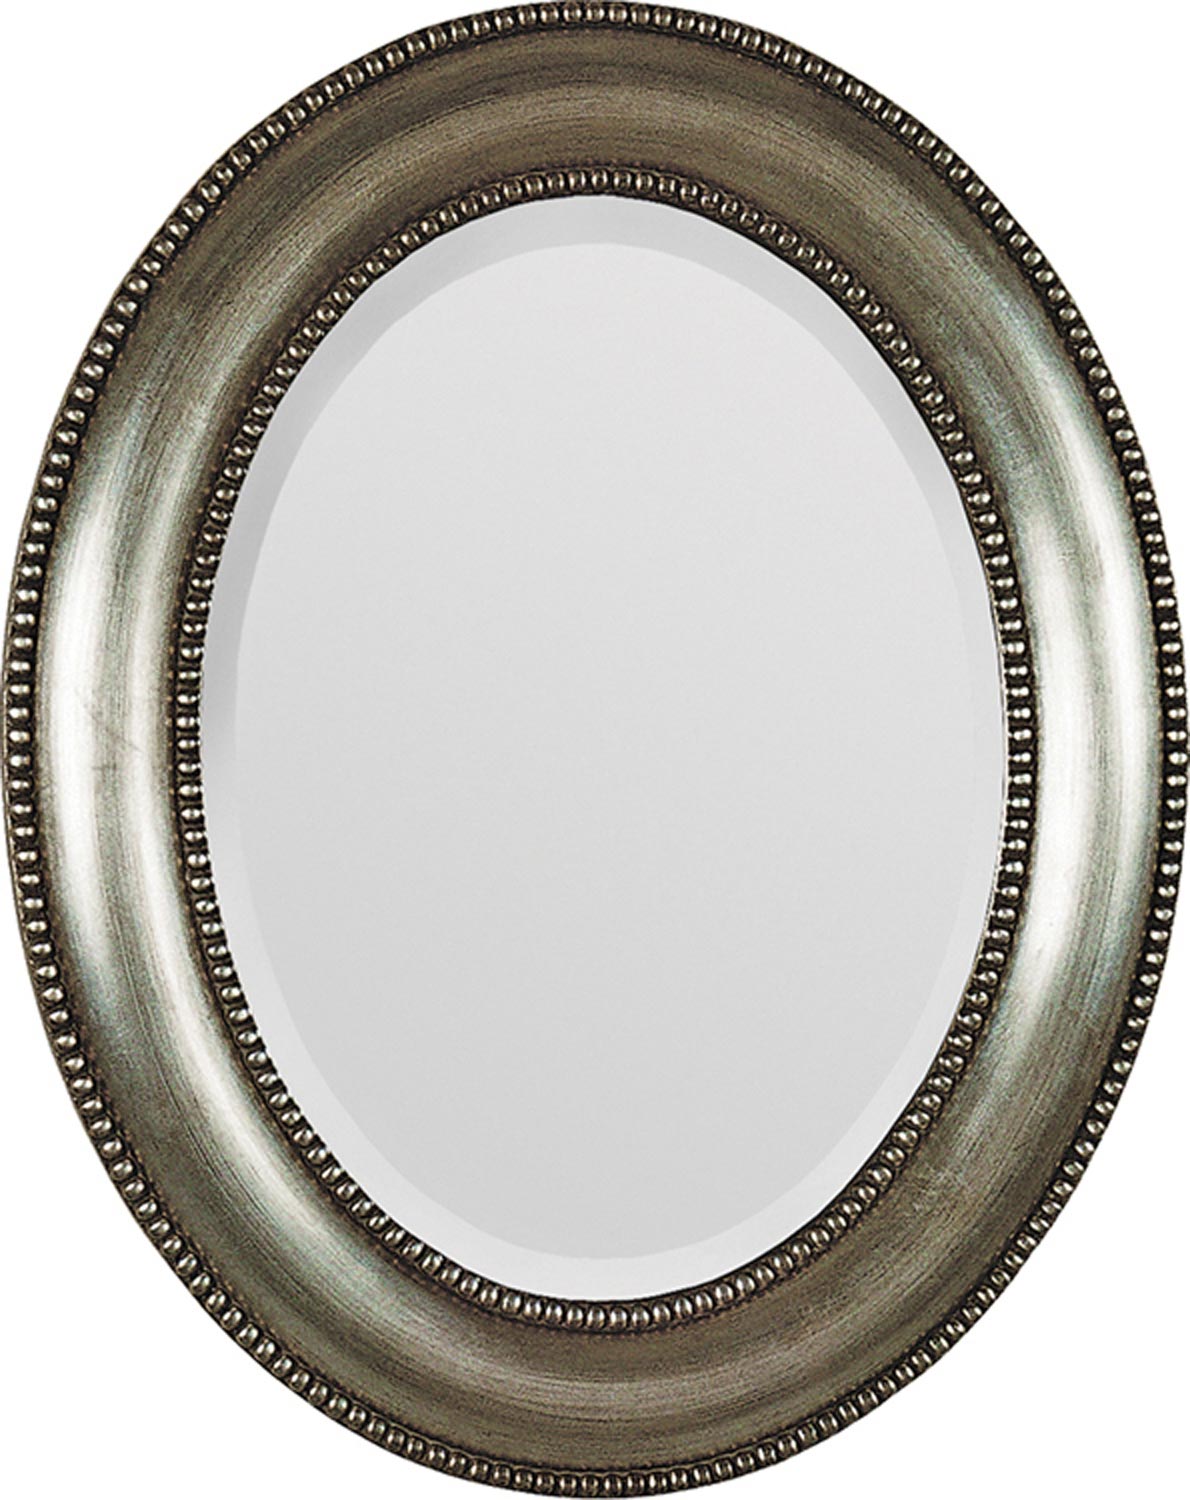 Ren-Wil MT677 Portrait Oval Mirror- Silver